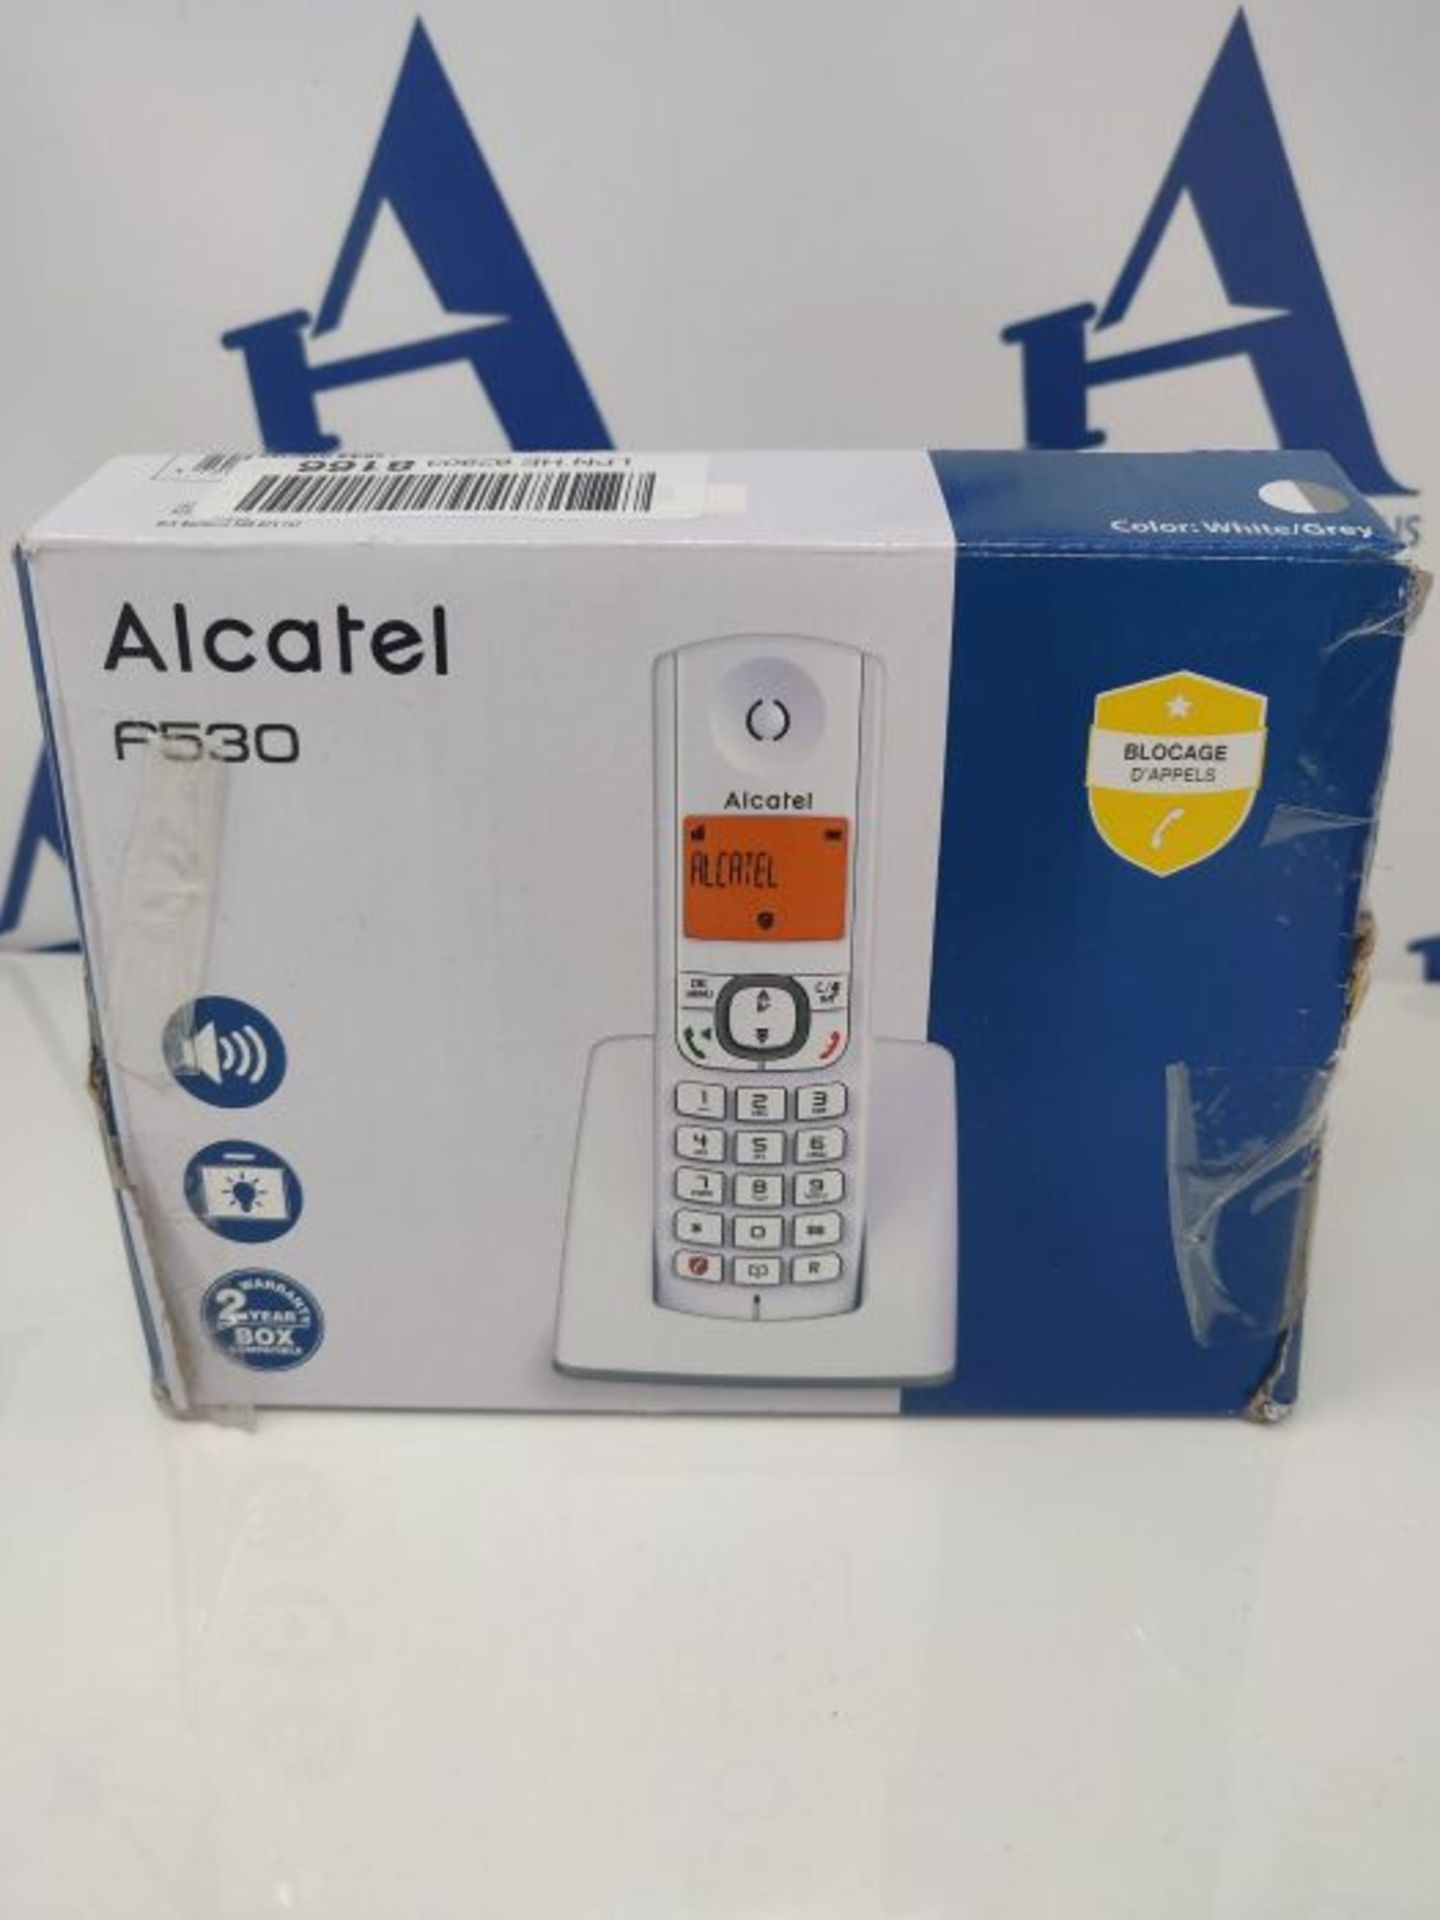 Alcatel F530 - TÃ©lÃ©phone sans fil DECT, Mains libres, Grand Ã©cran rÃ©troÃ? - Image 2 of 3